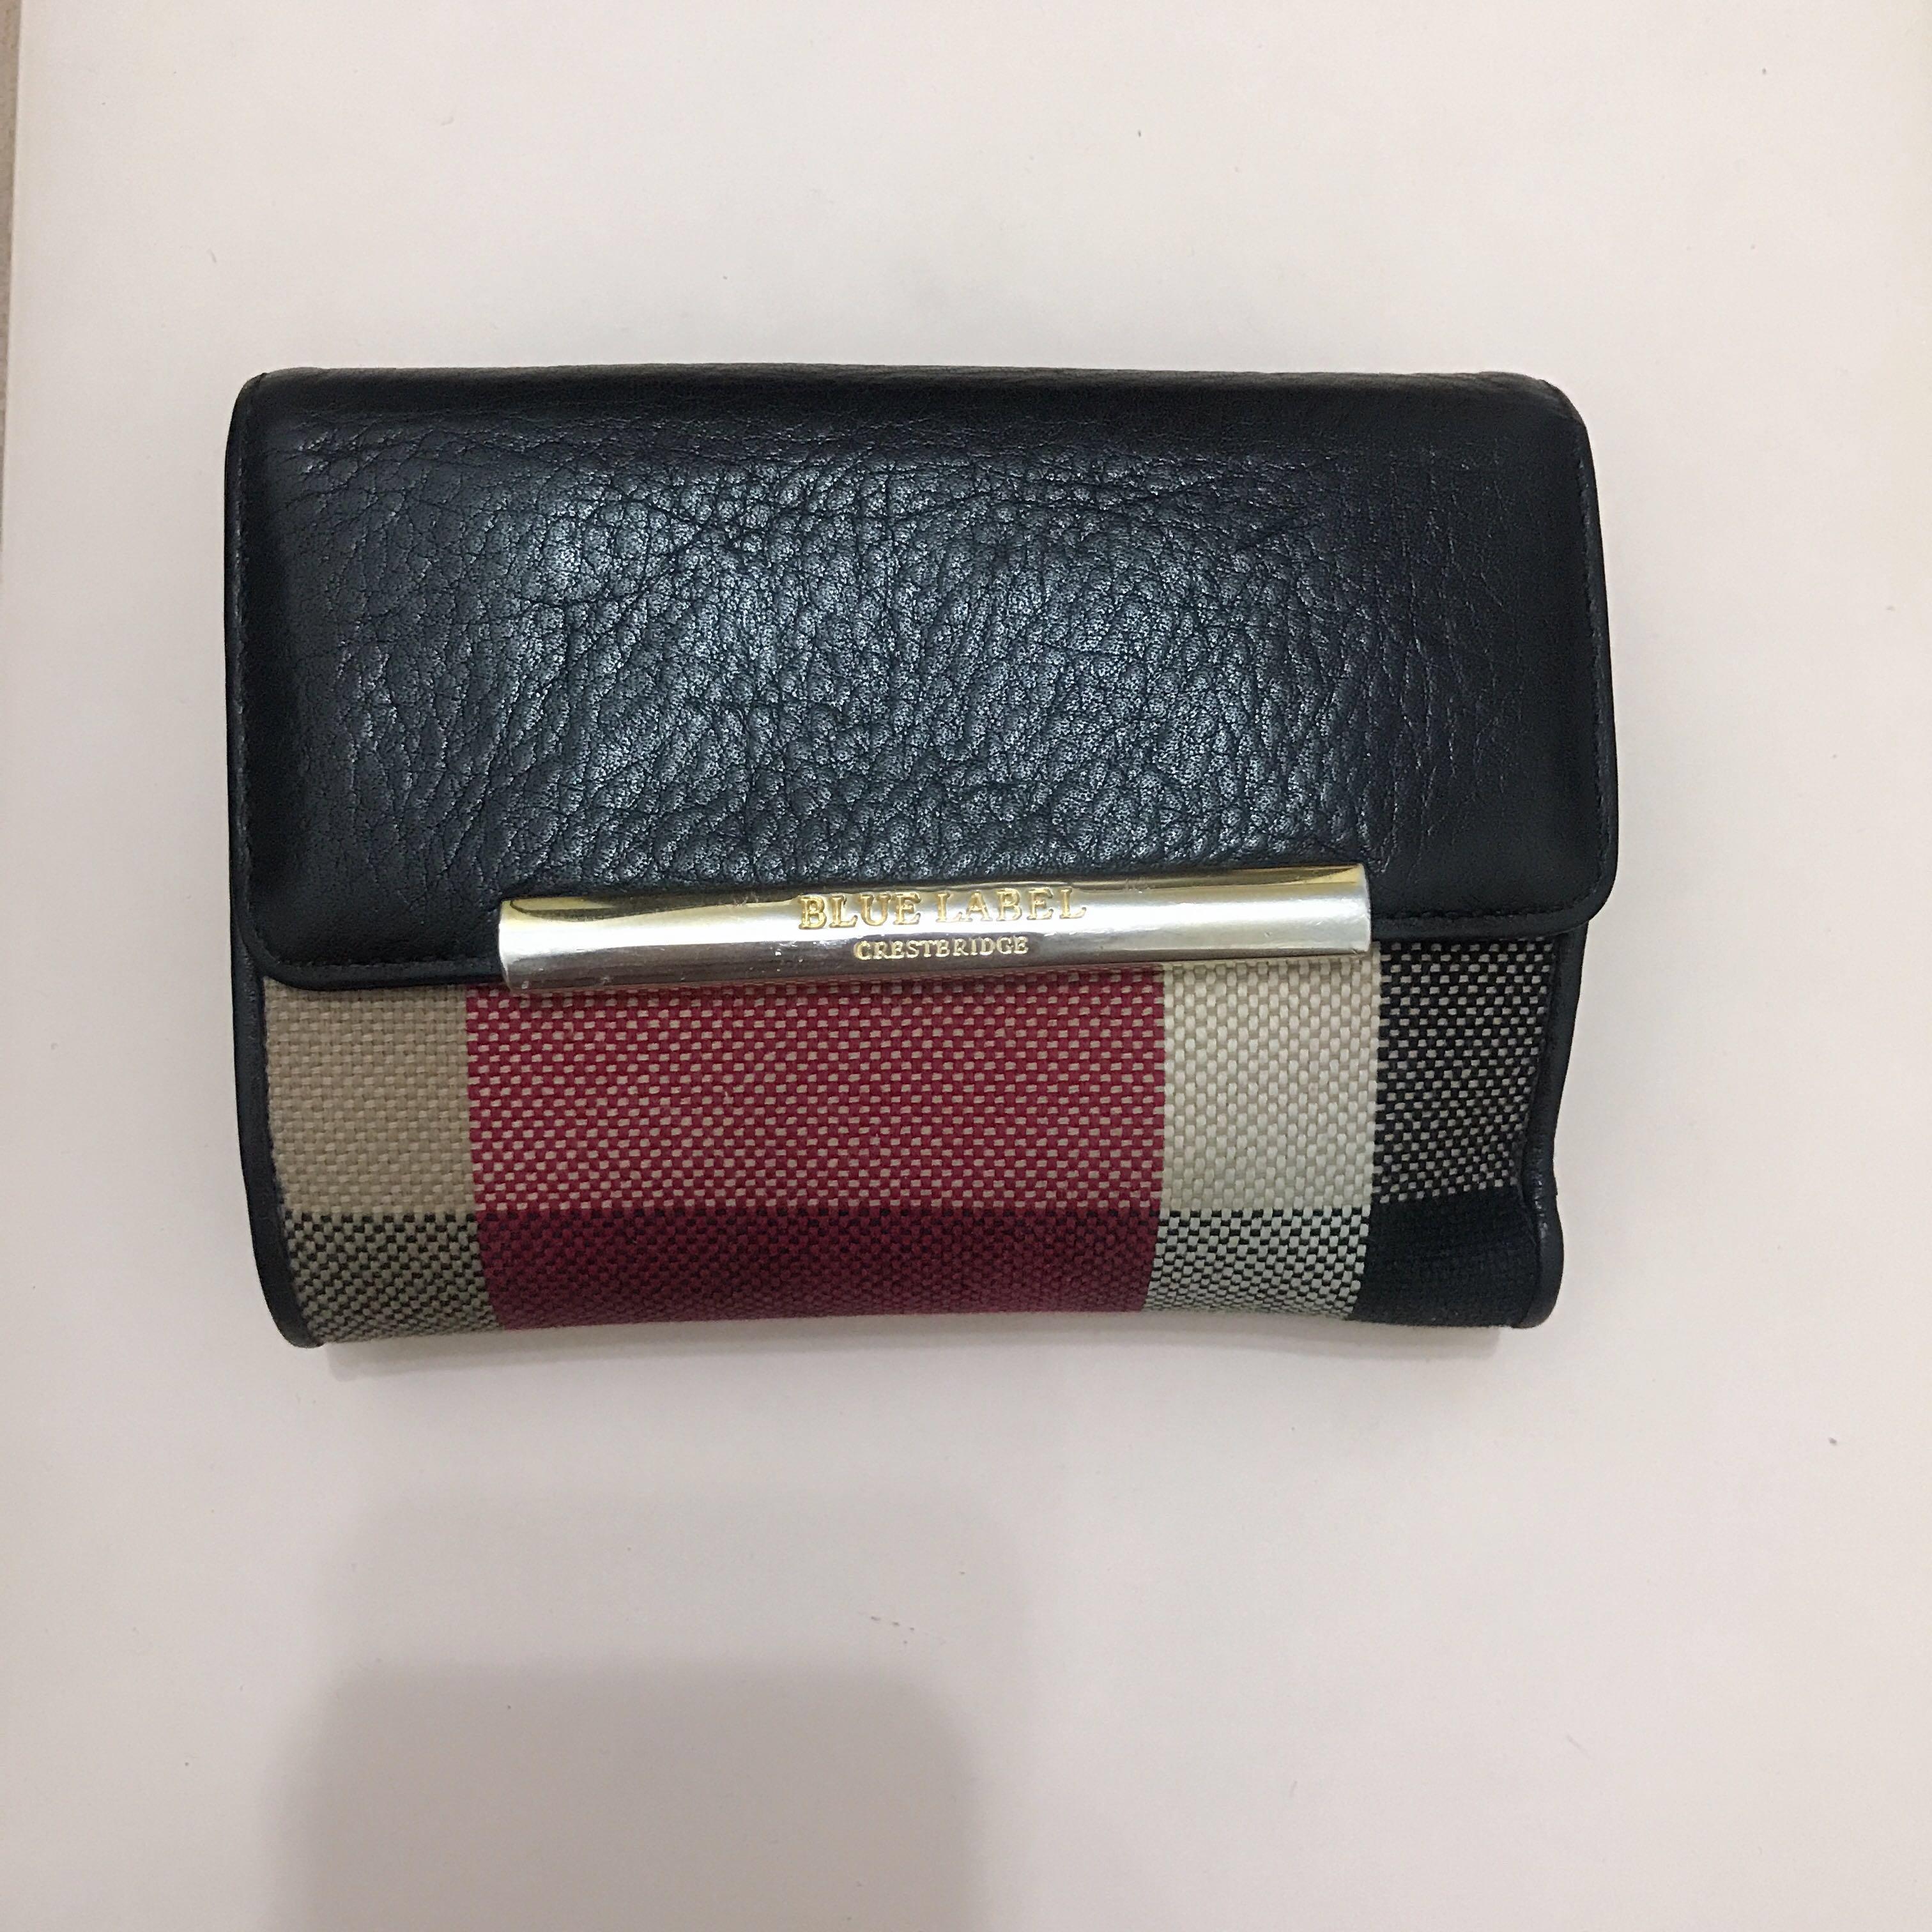 black label crestbridge wallet